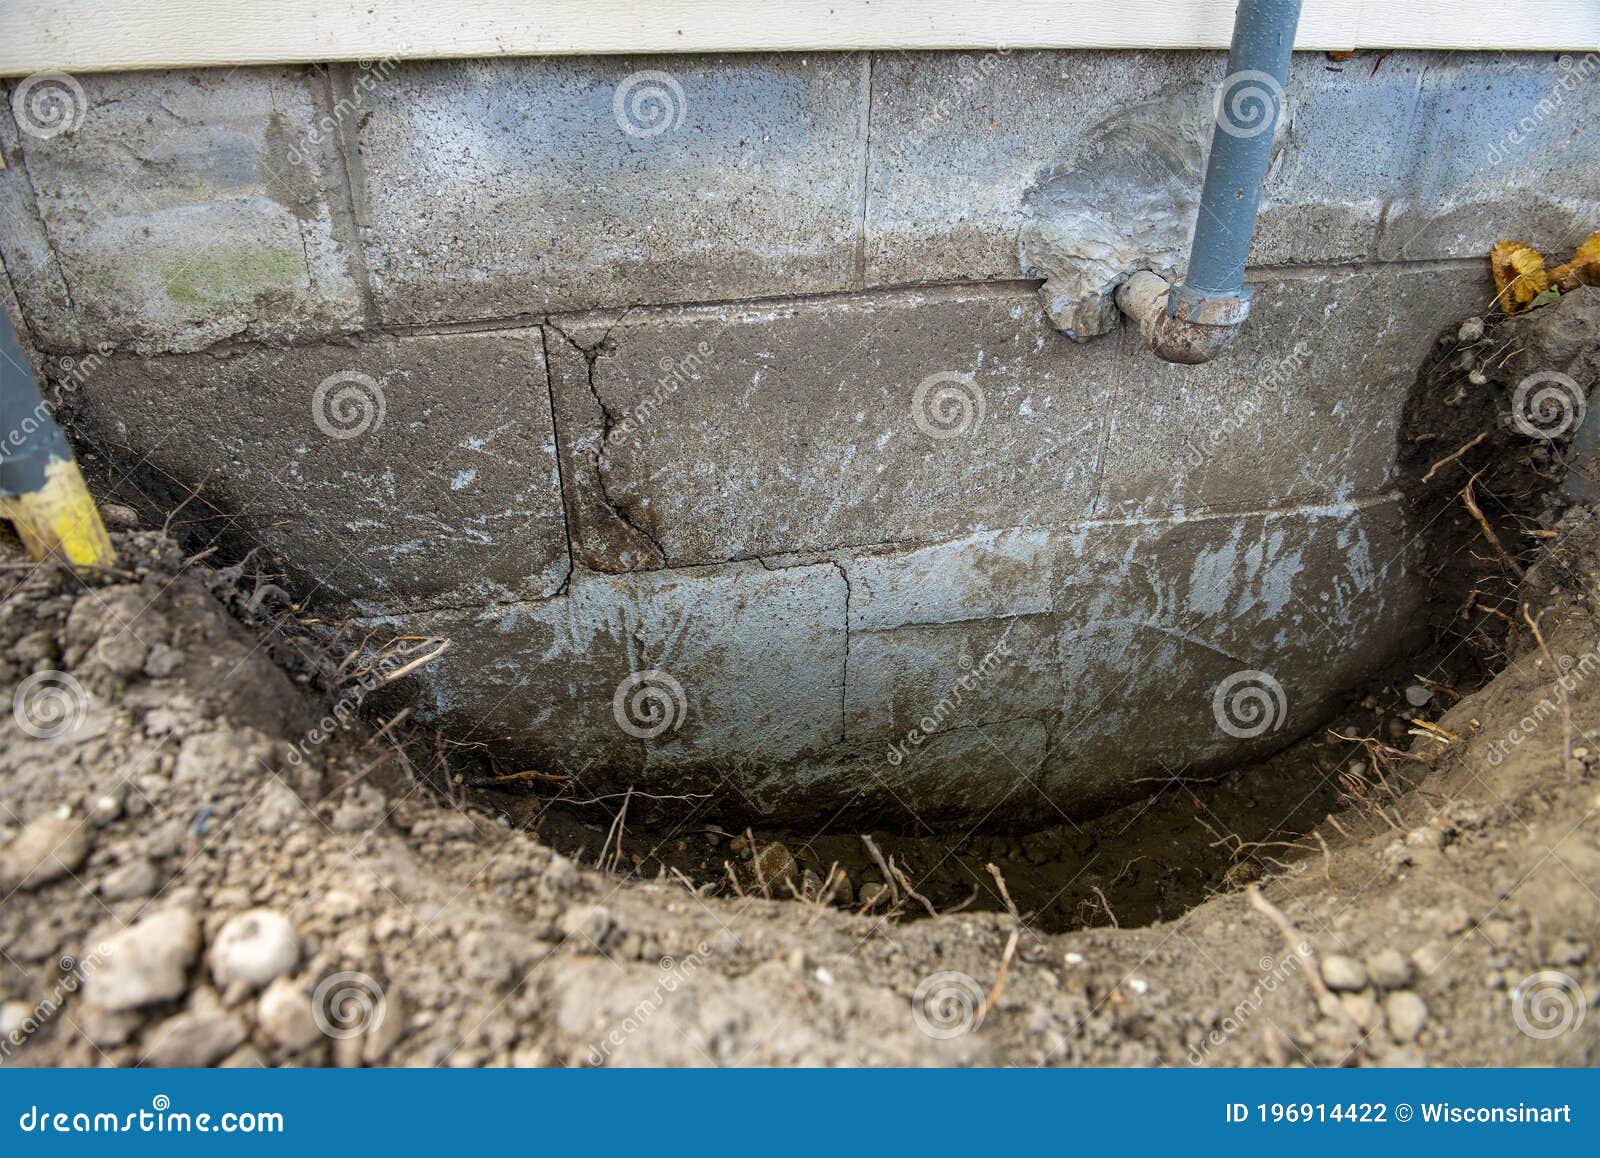 basement foundation crack, water leak, seepage